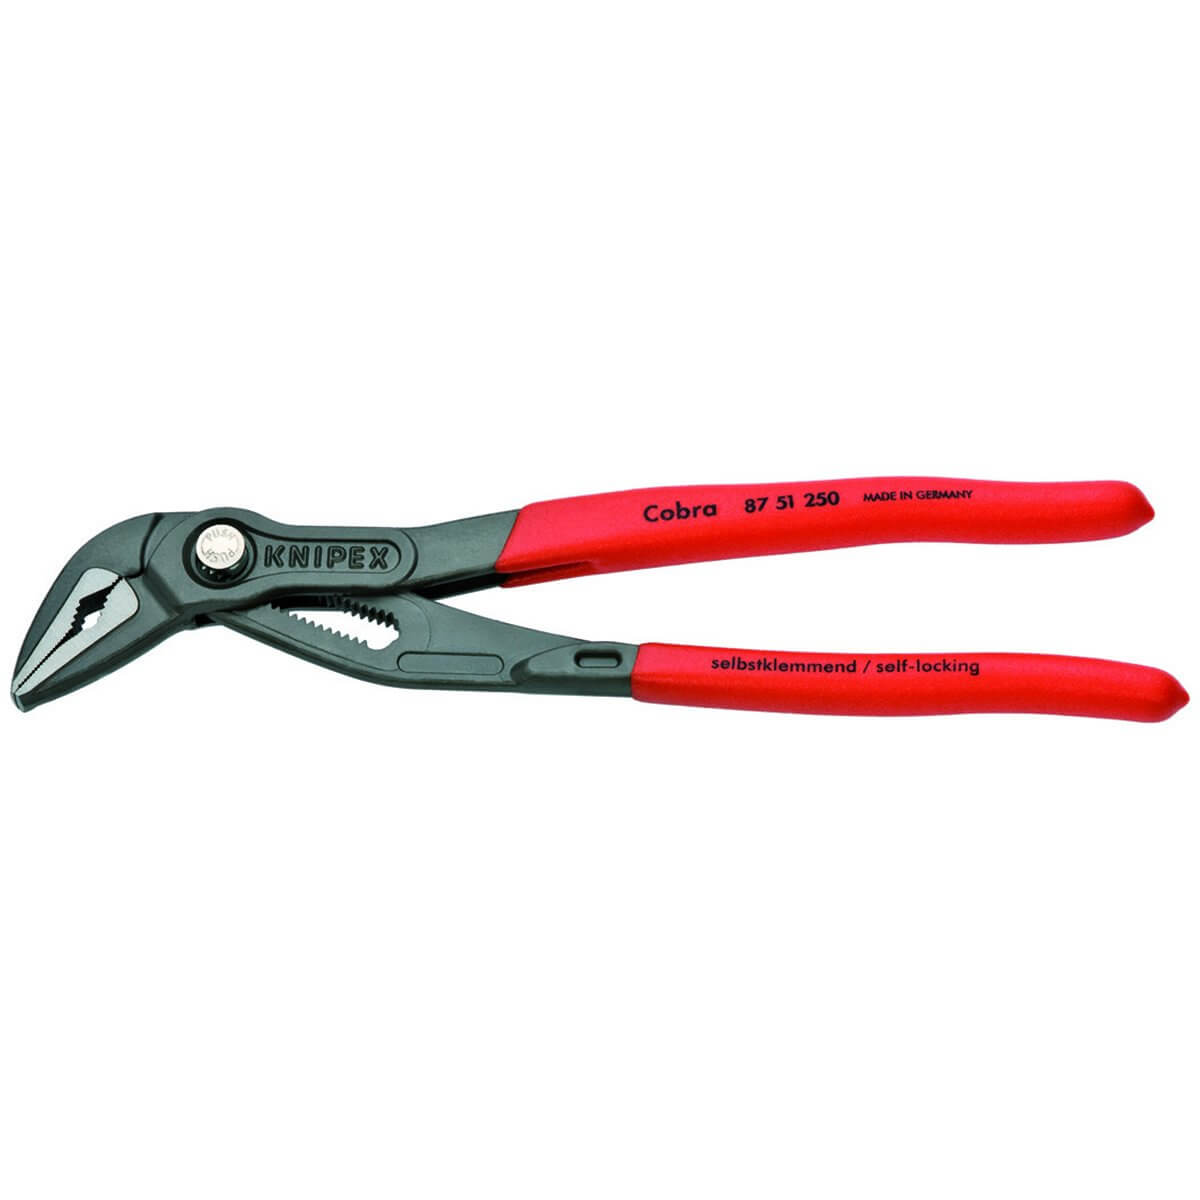 Knipex 8751250 - Cobra ES Pliers - wise-line-tools